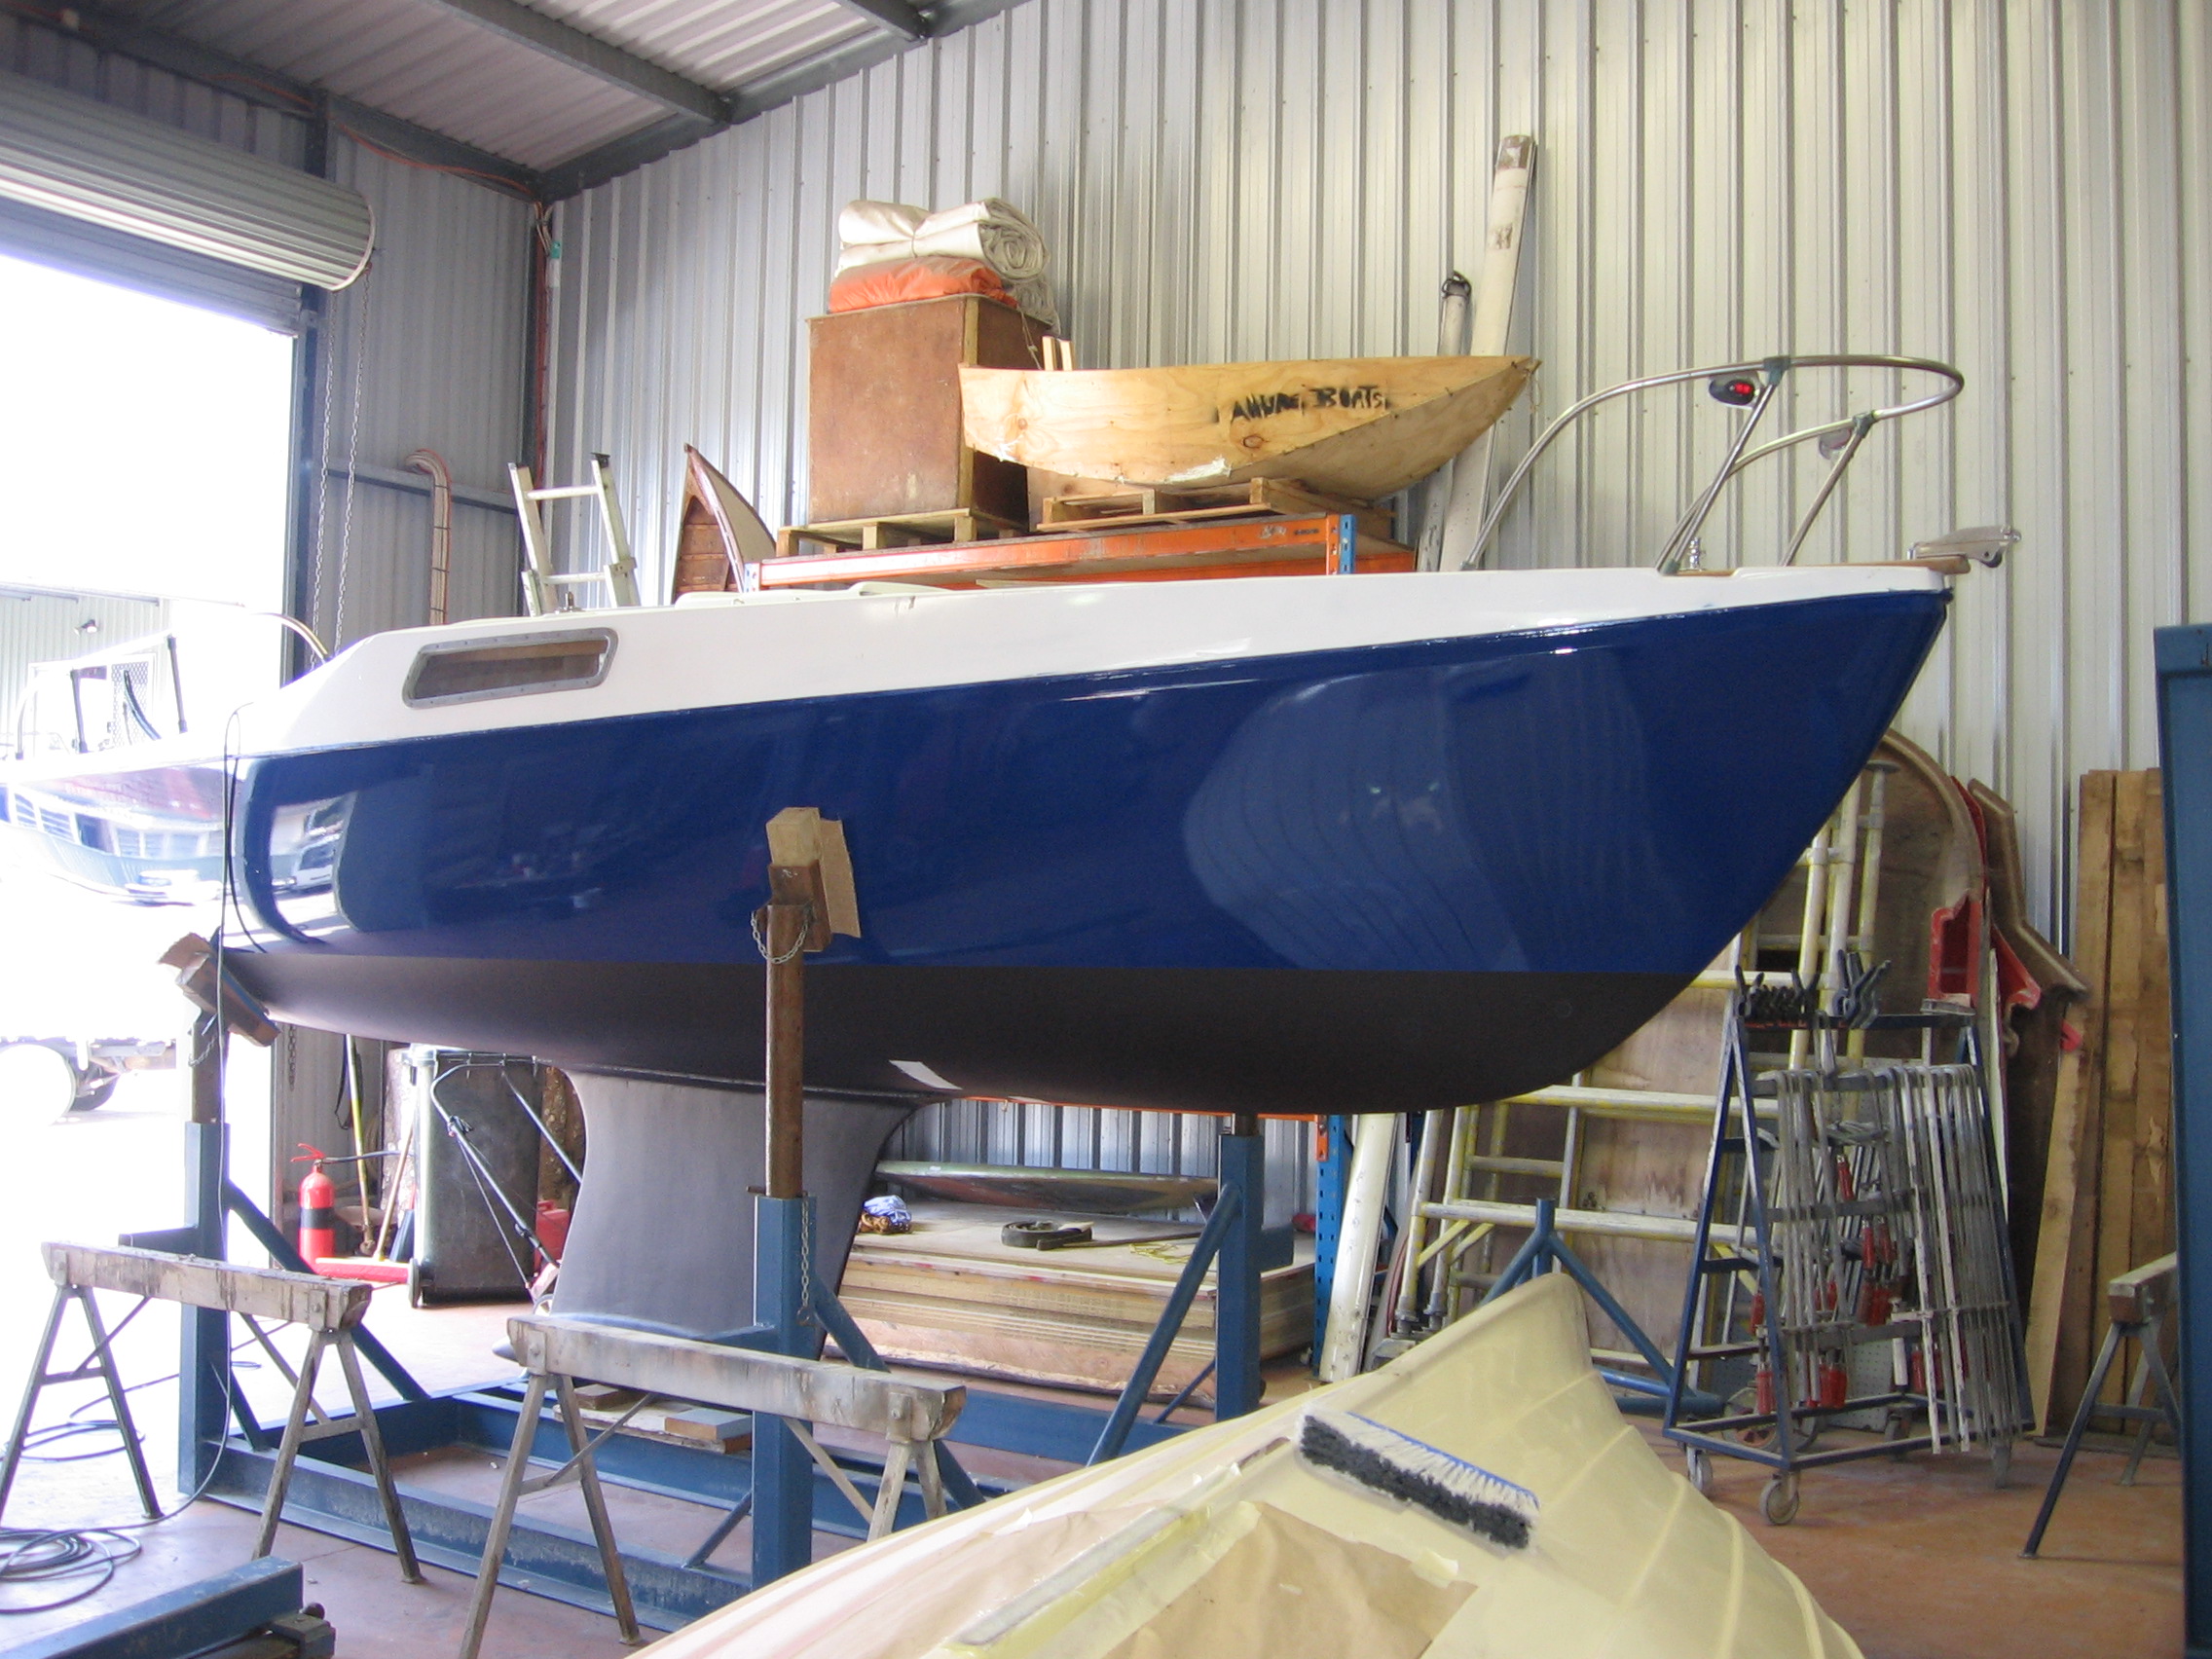 Making old boats new again, repairs, restoration